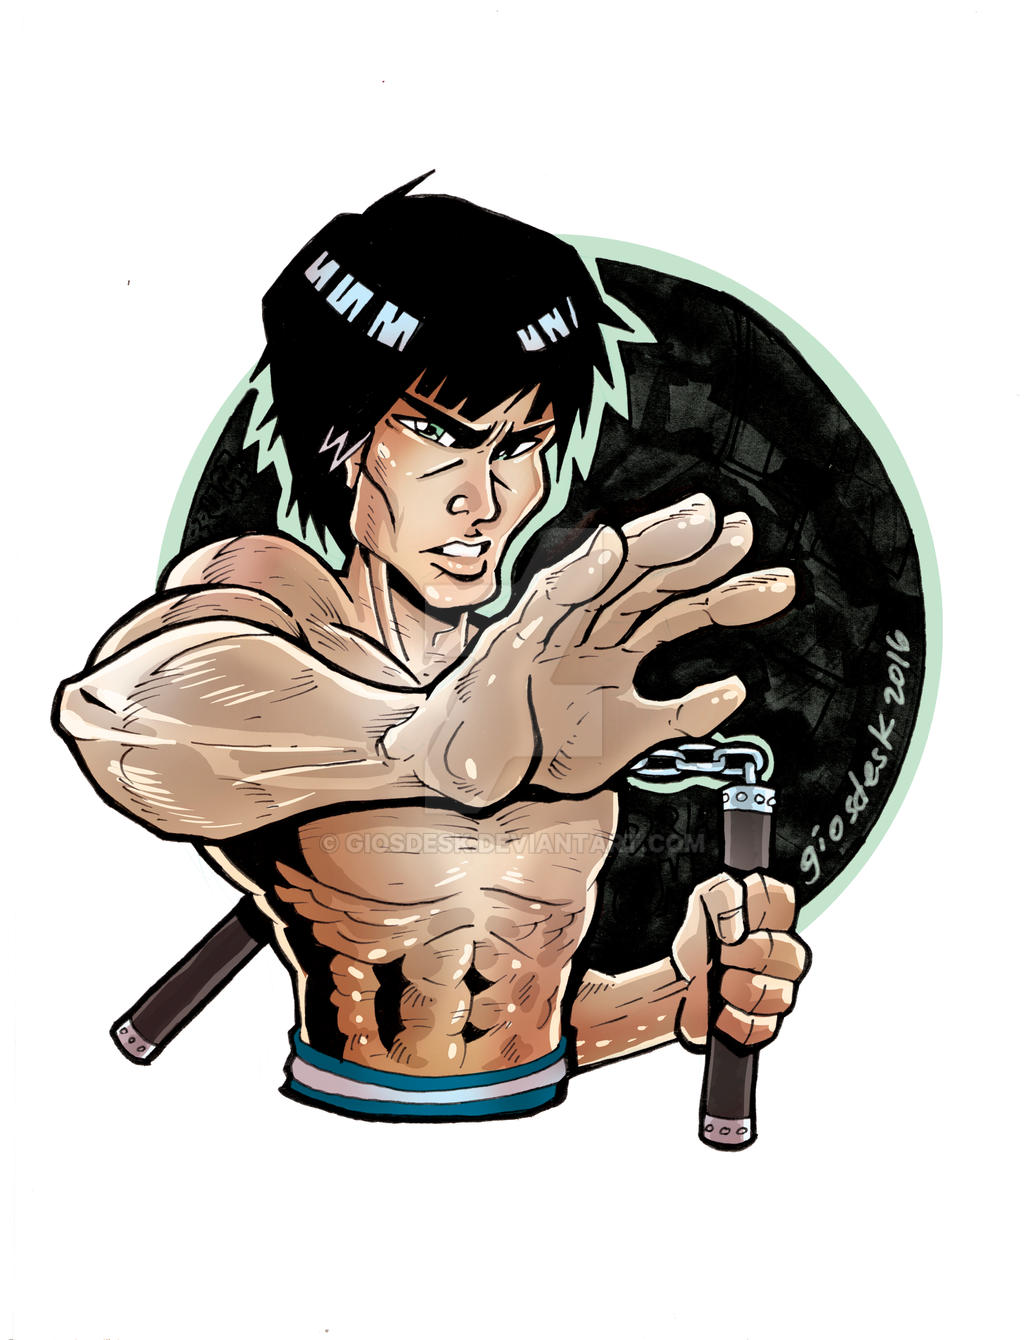 Bruce Lee Cartoon by giosdesk on DeviantArt